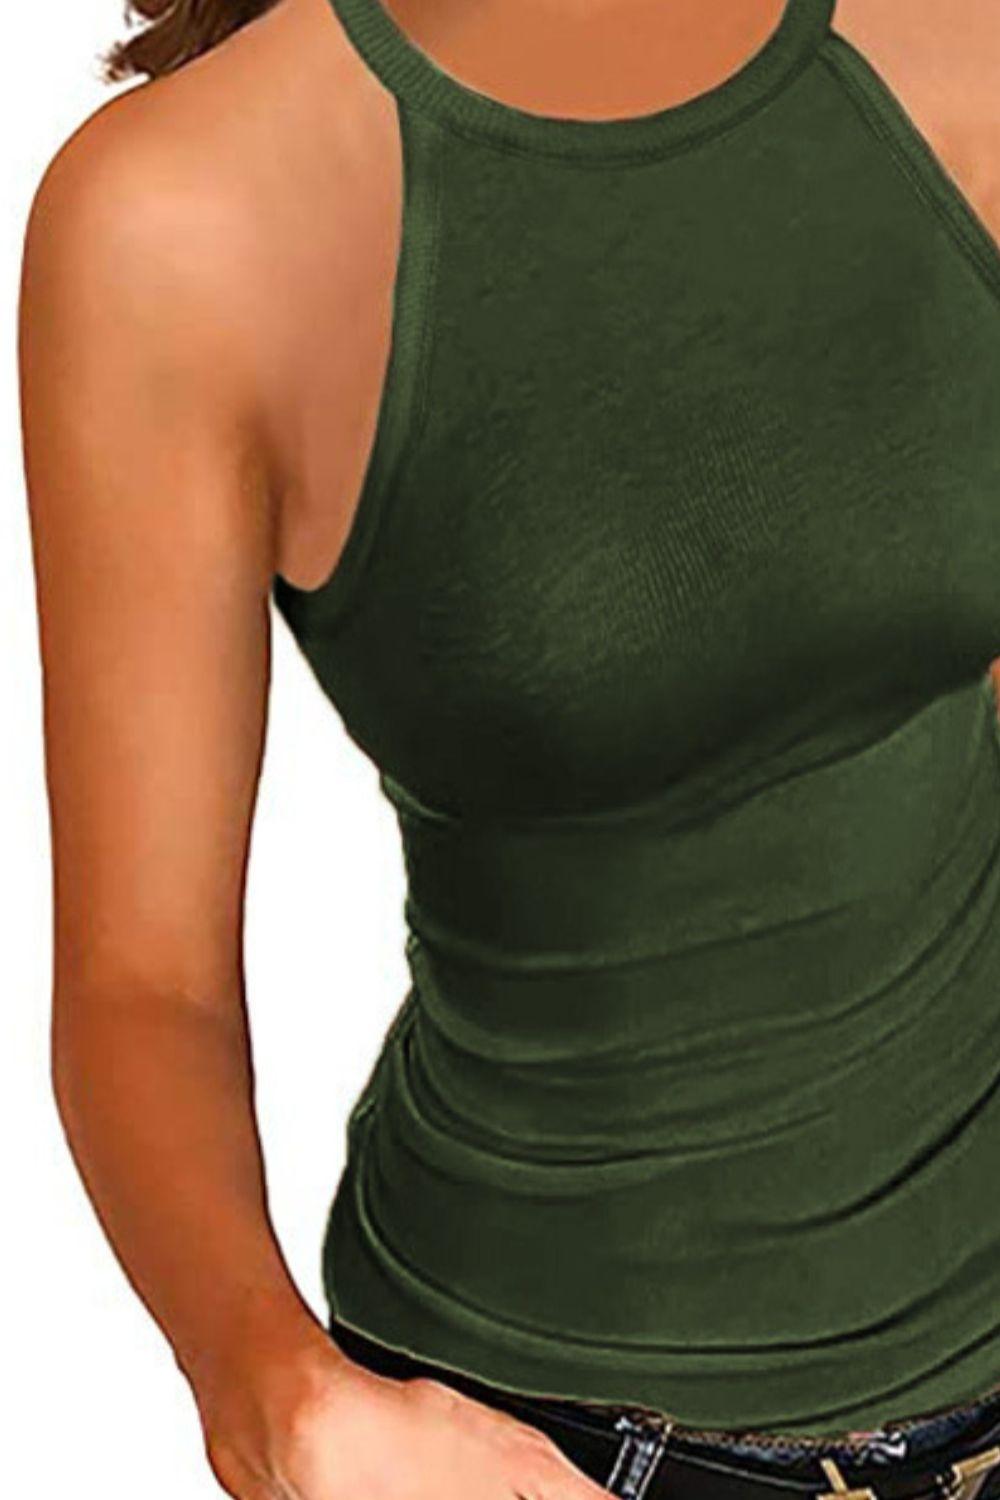 a woman wearing a green tank top